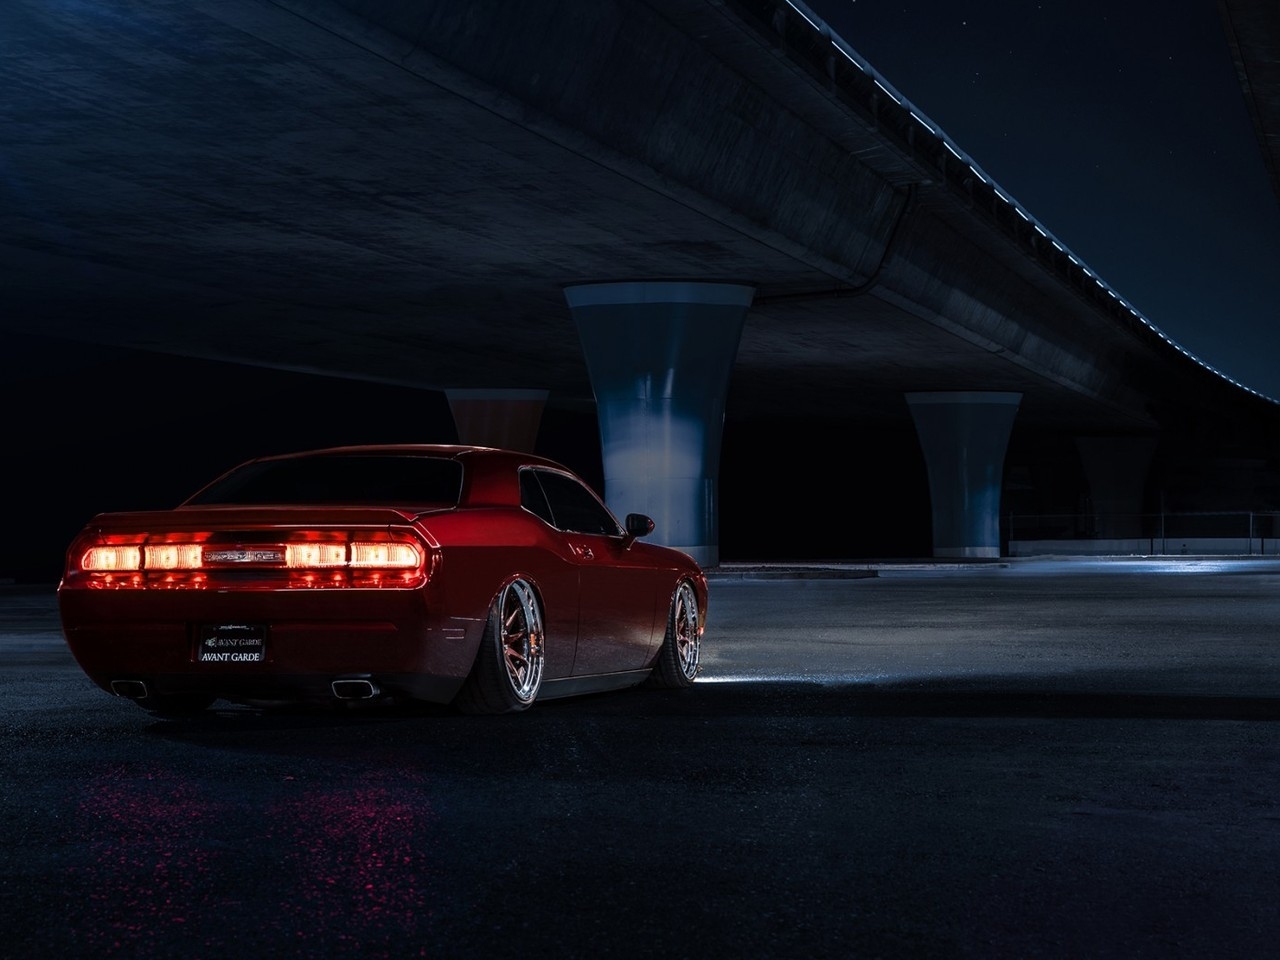 Dodge Challenger Avant Garde Back View for 1280 x 960 resolution